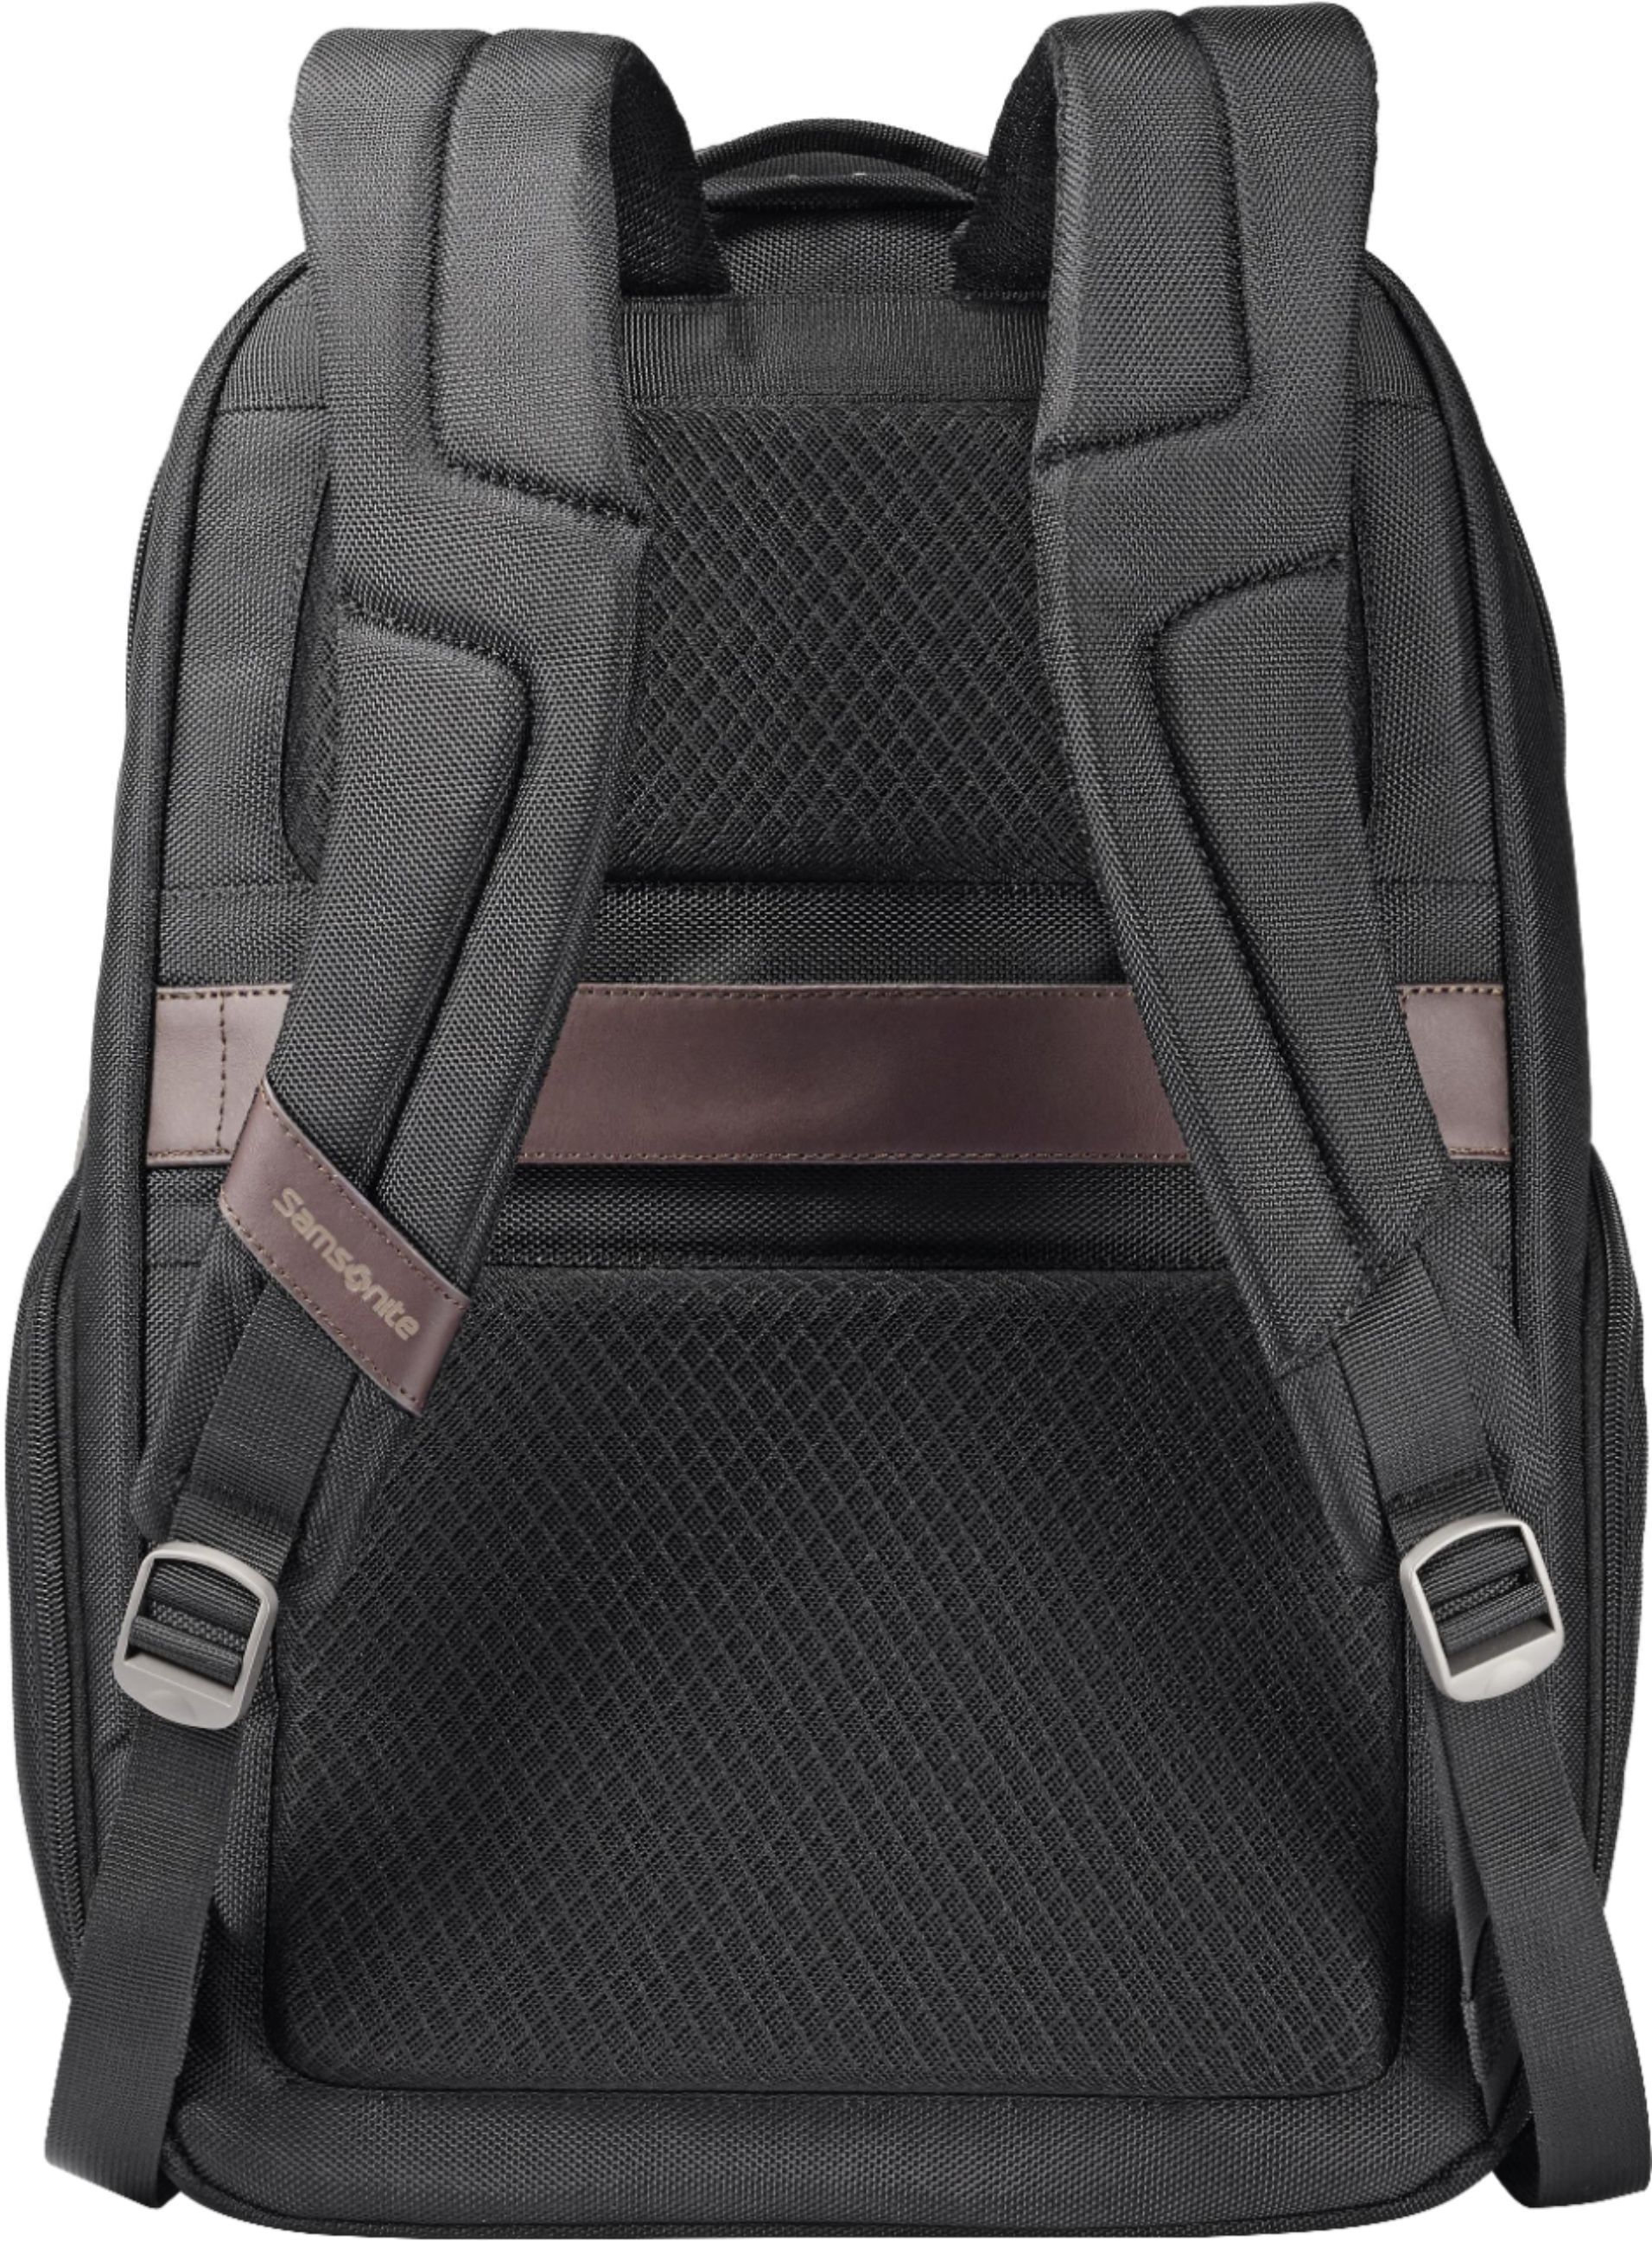 Back View: Samsonite - Large Kombi Backpack for 15.6" Laptop - Black/Brown